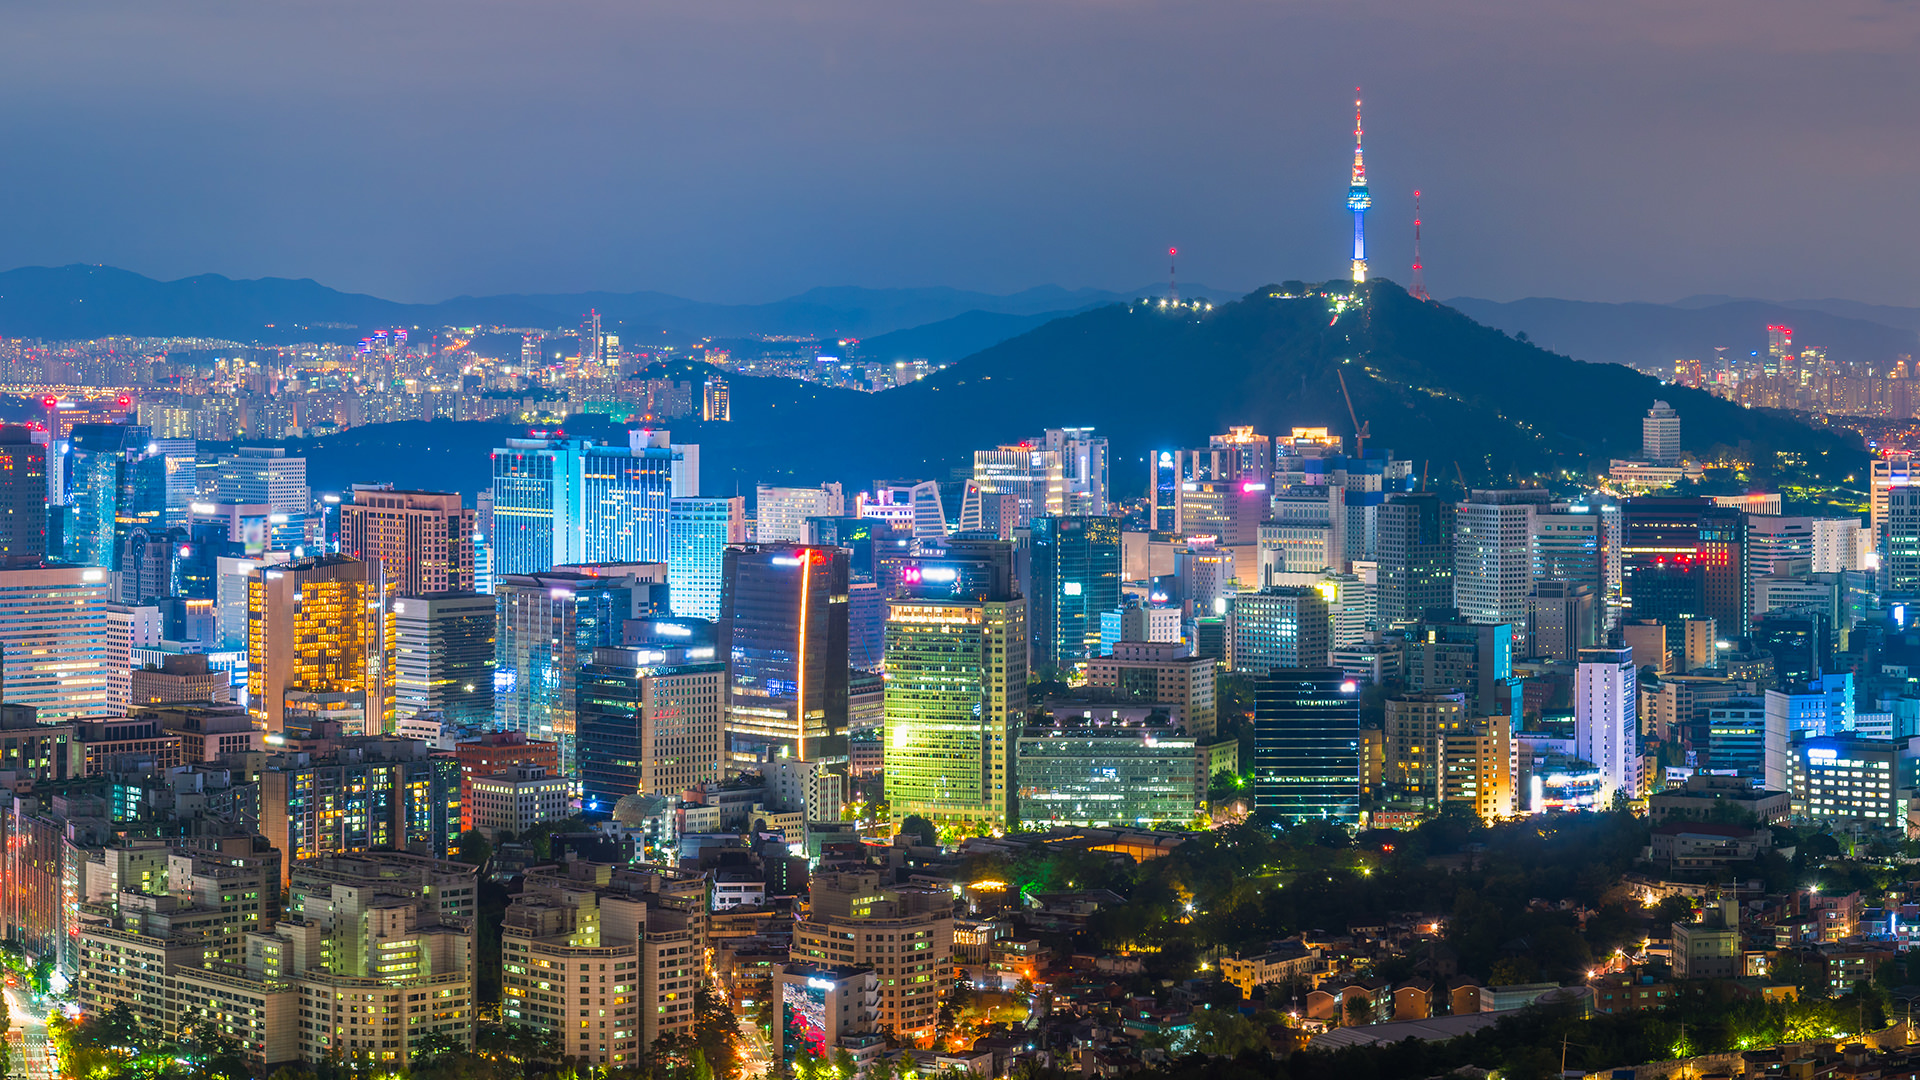 Seoul, South Korea at night